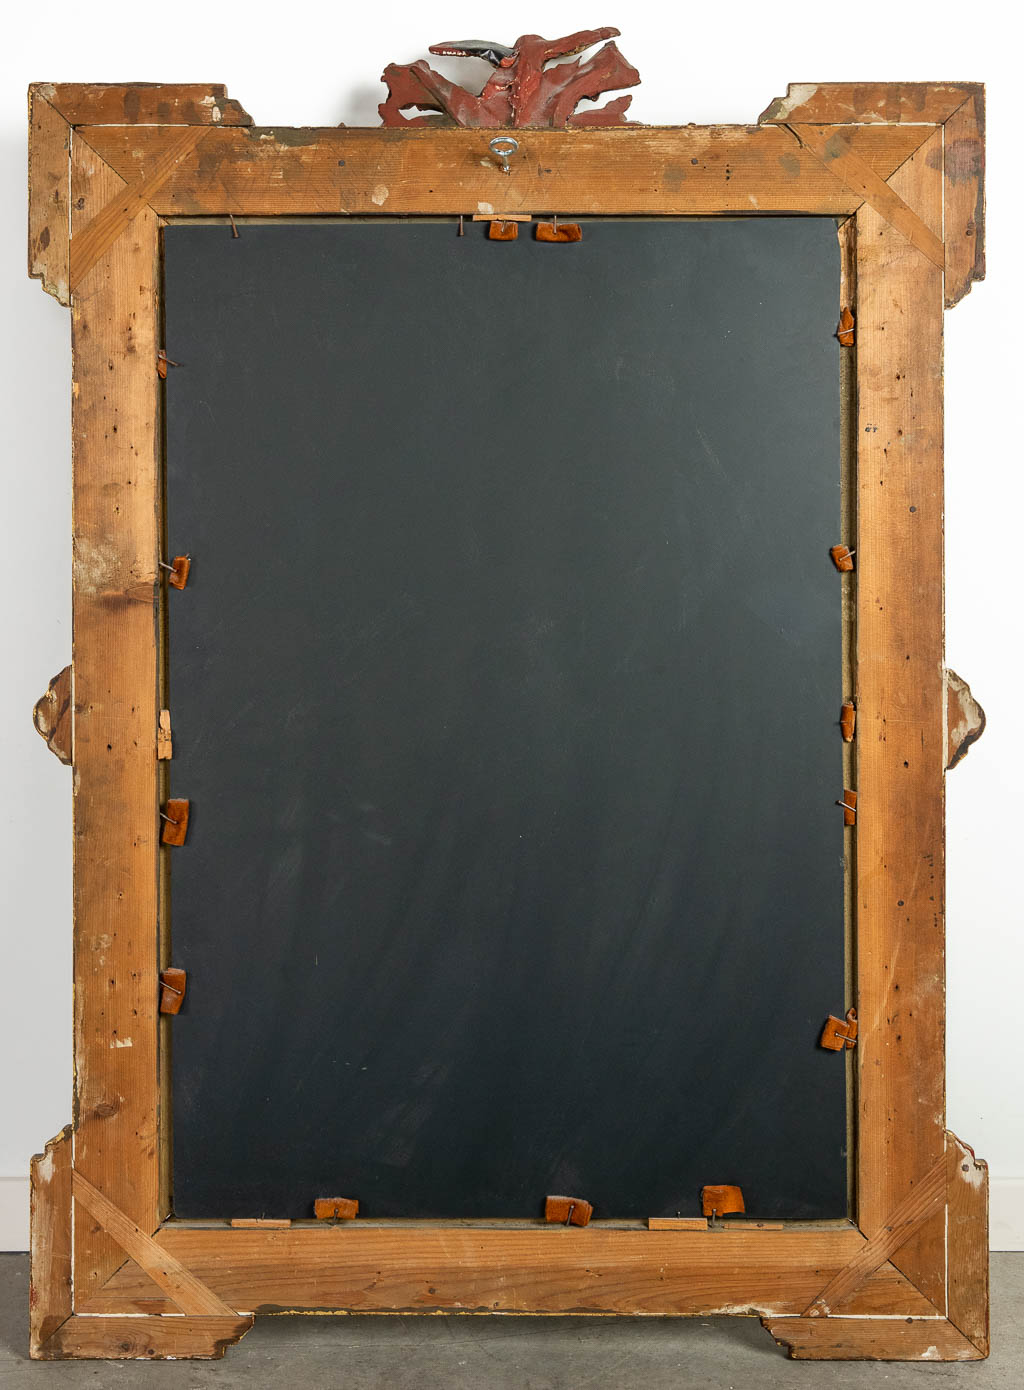 An antique mirror, gilt stucco. Circa 1900. (W:61 x H:114 cm)